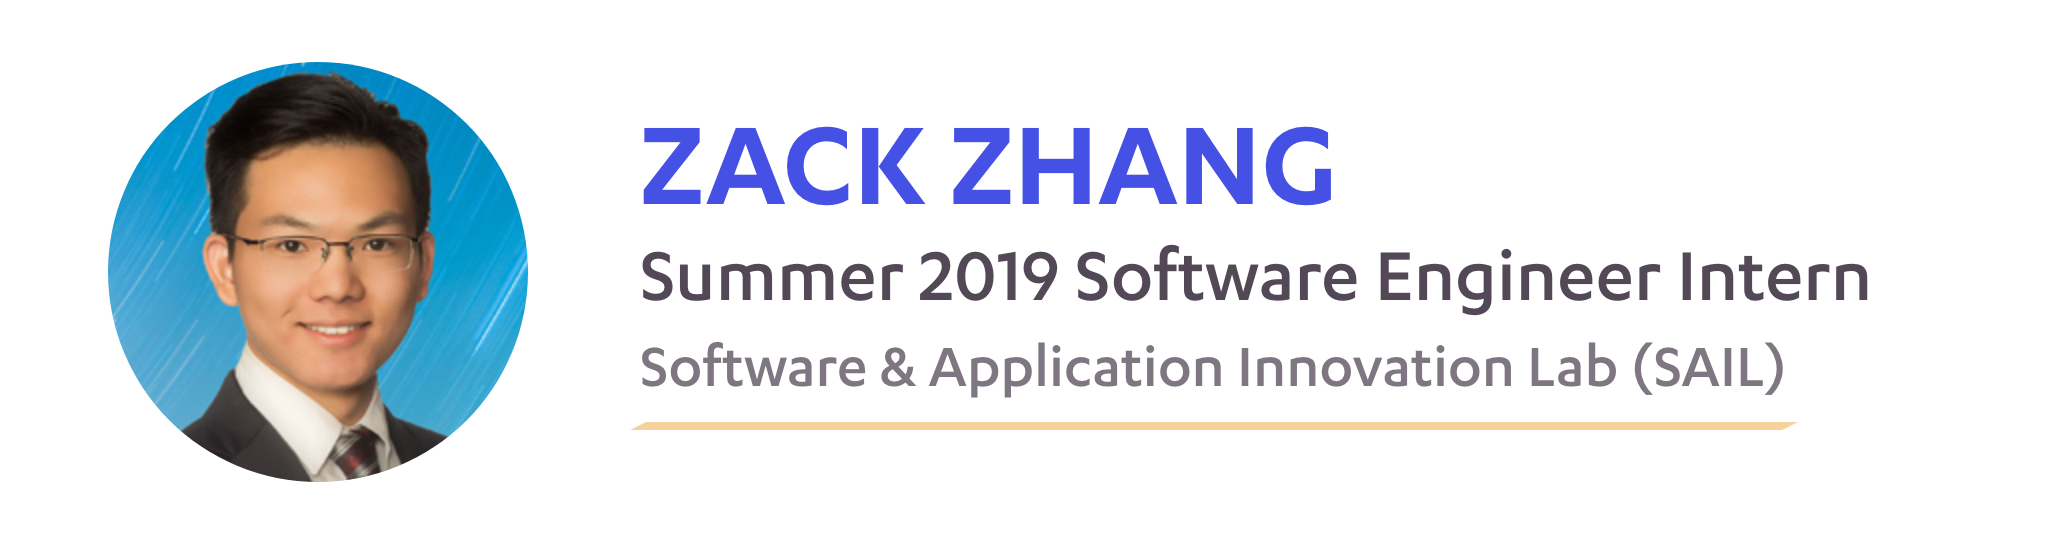 Zack Zhang, SAIL Summer 2019 Software Engineer